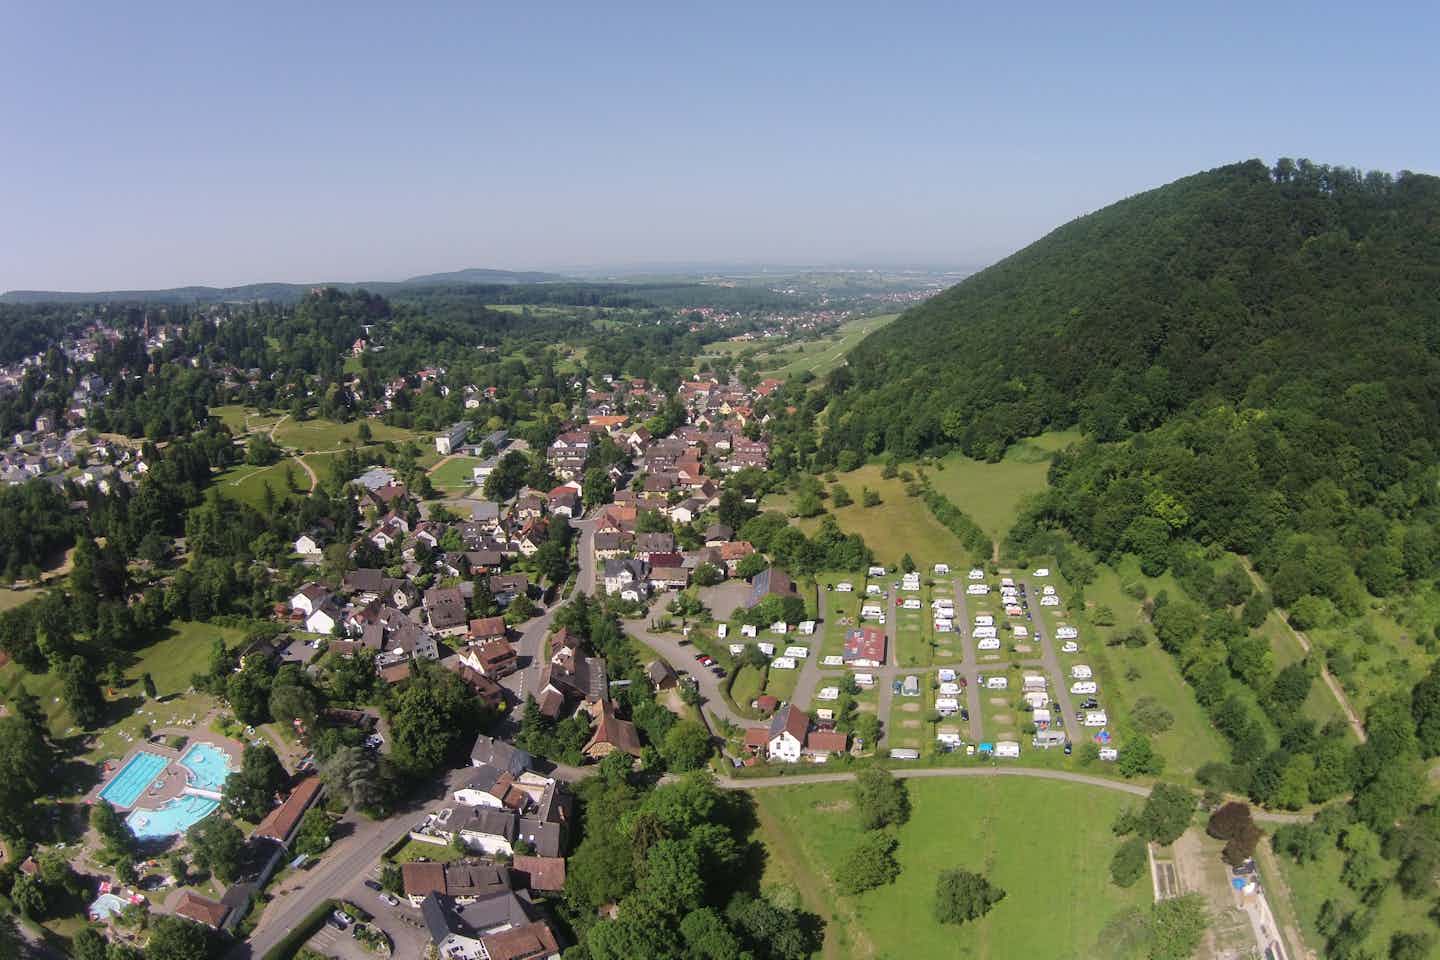 Feriencamping Badenweiler